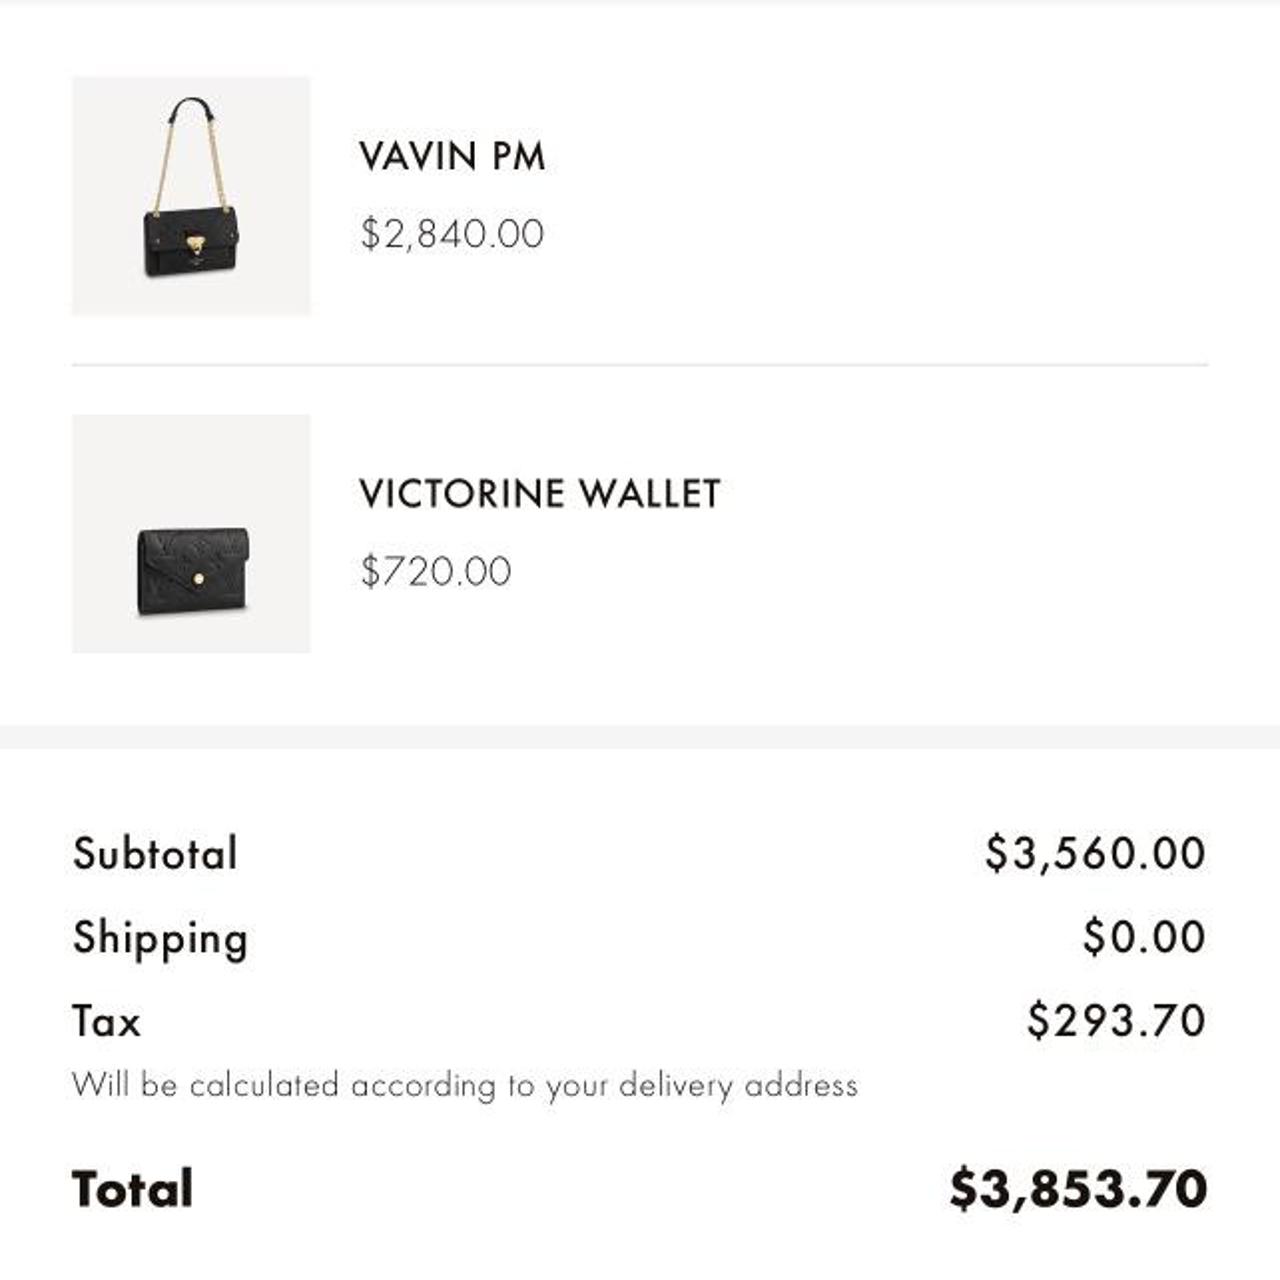 Louis Vuitton x Virgil Abloh I got this bag from - Depop